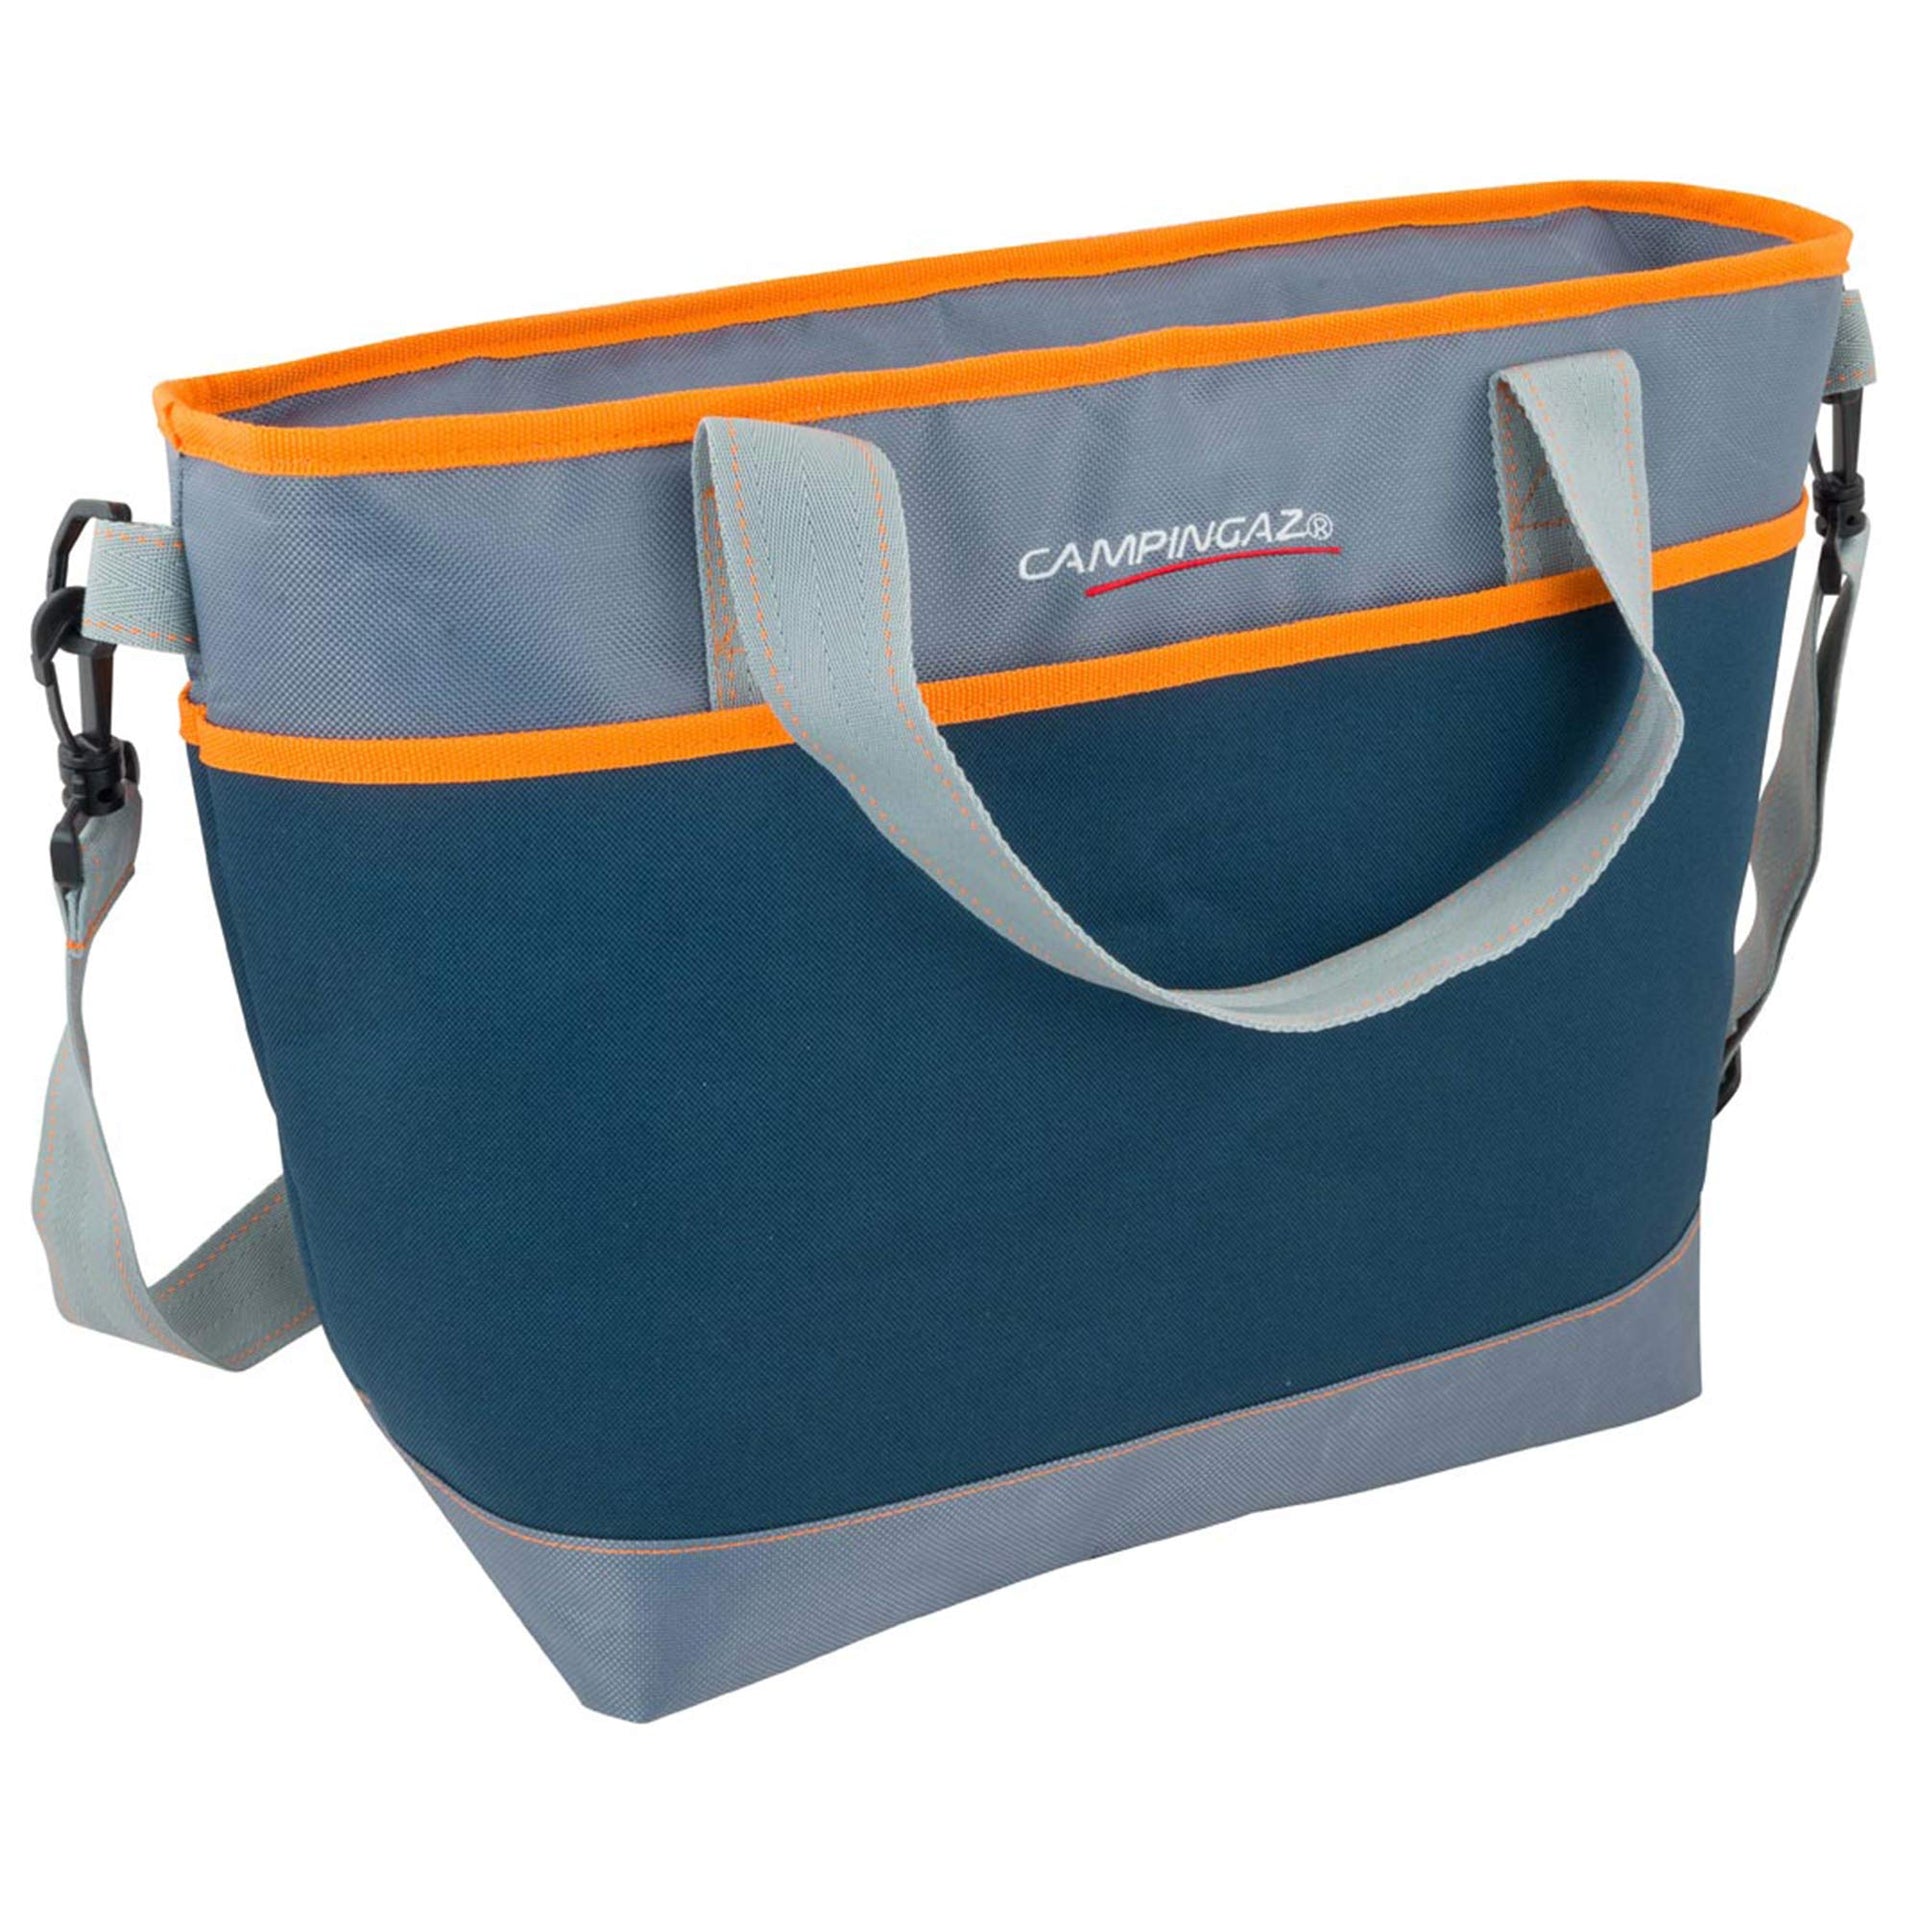 Cool Bag Shopping Tropic 19 L blue